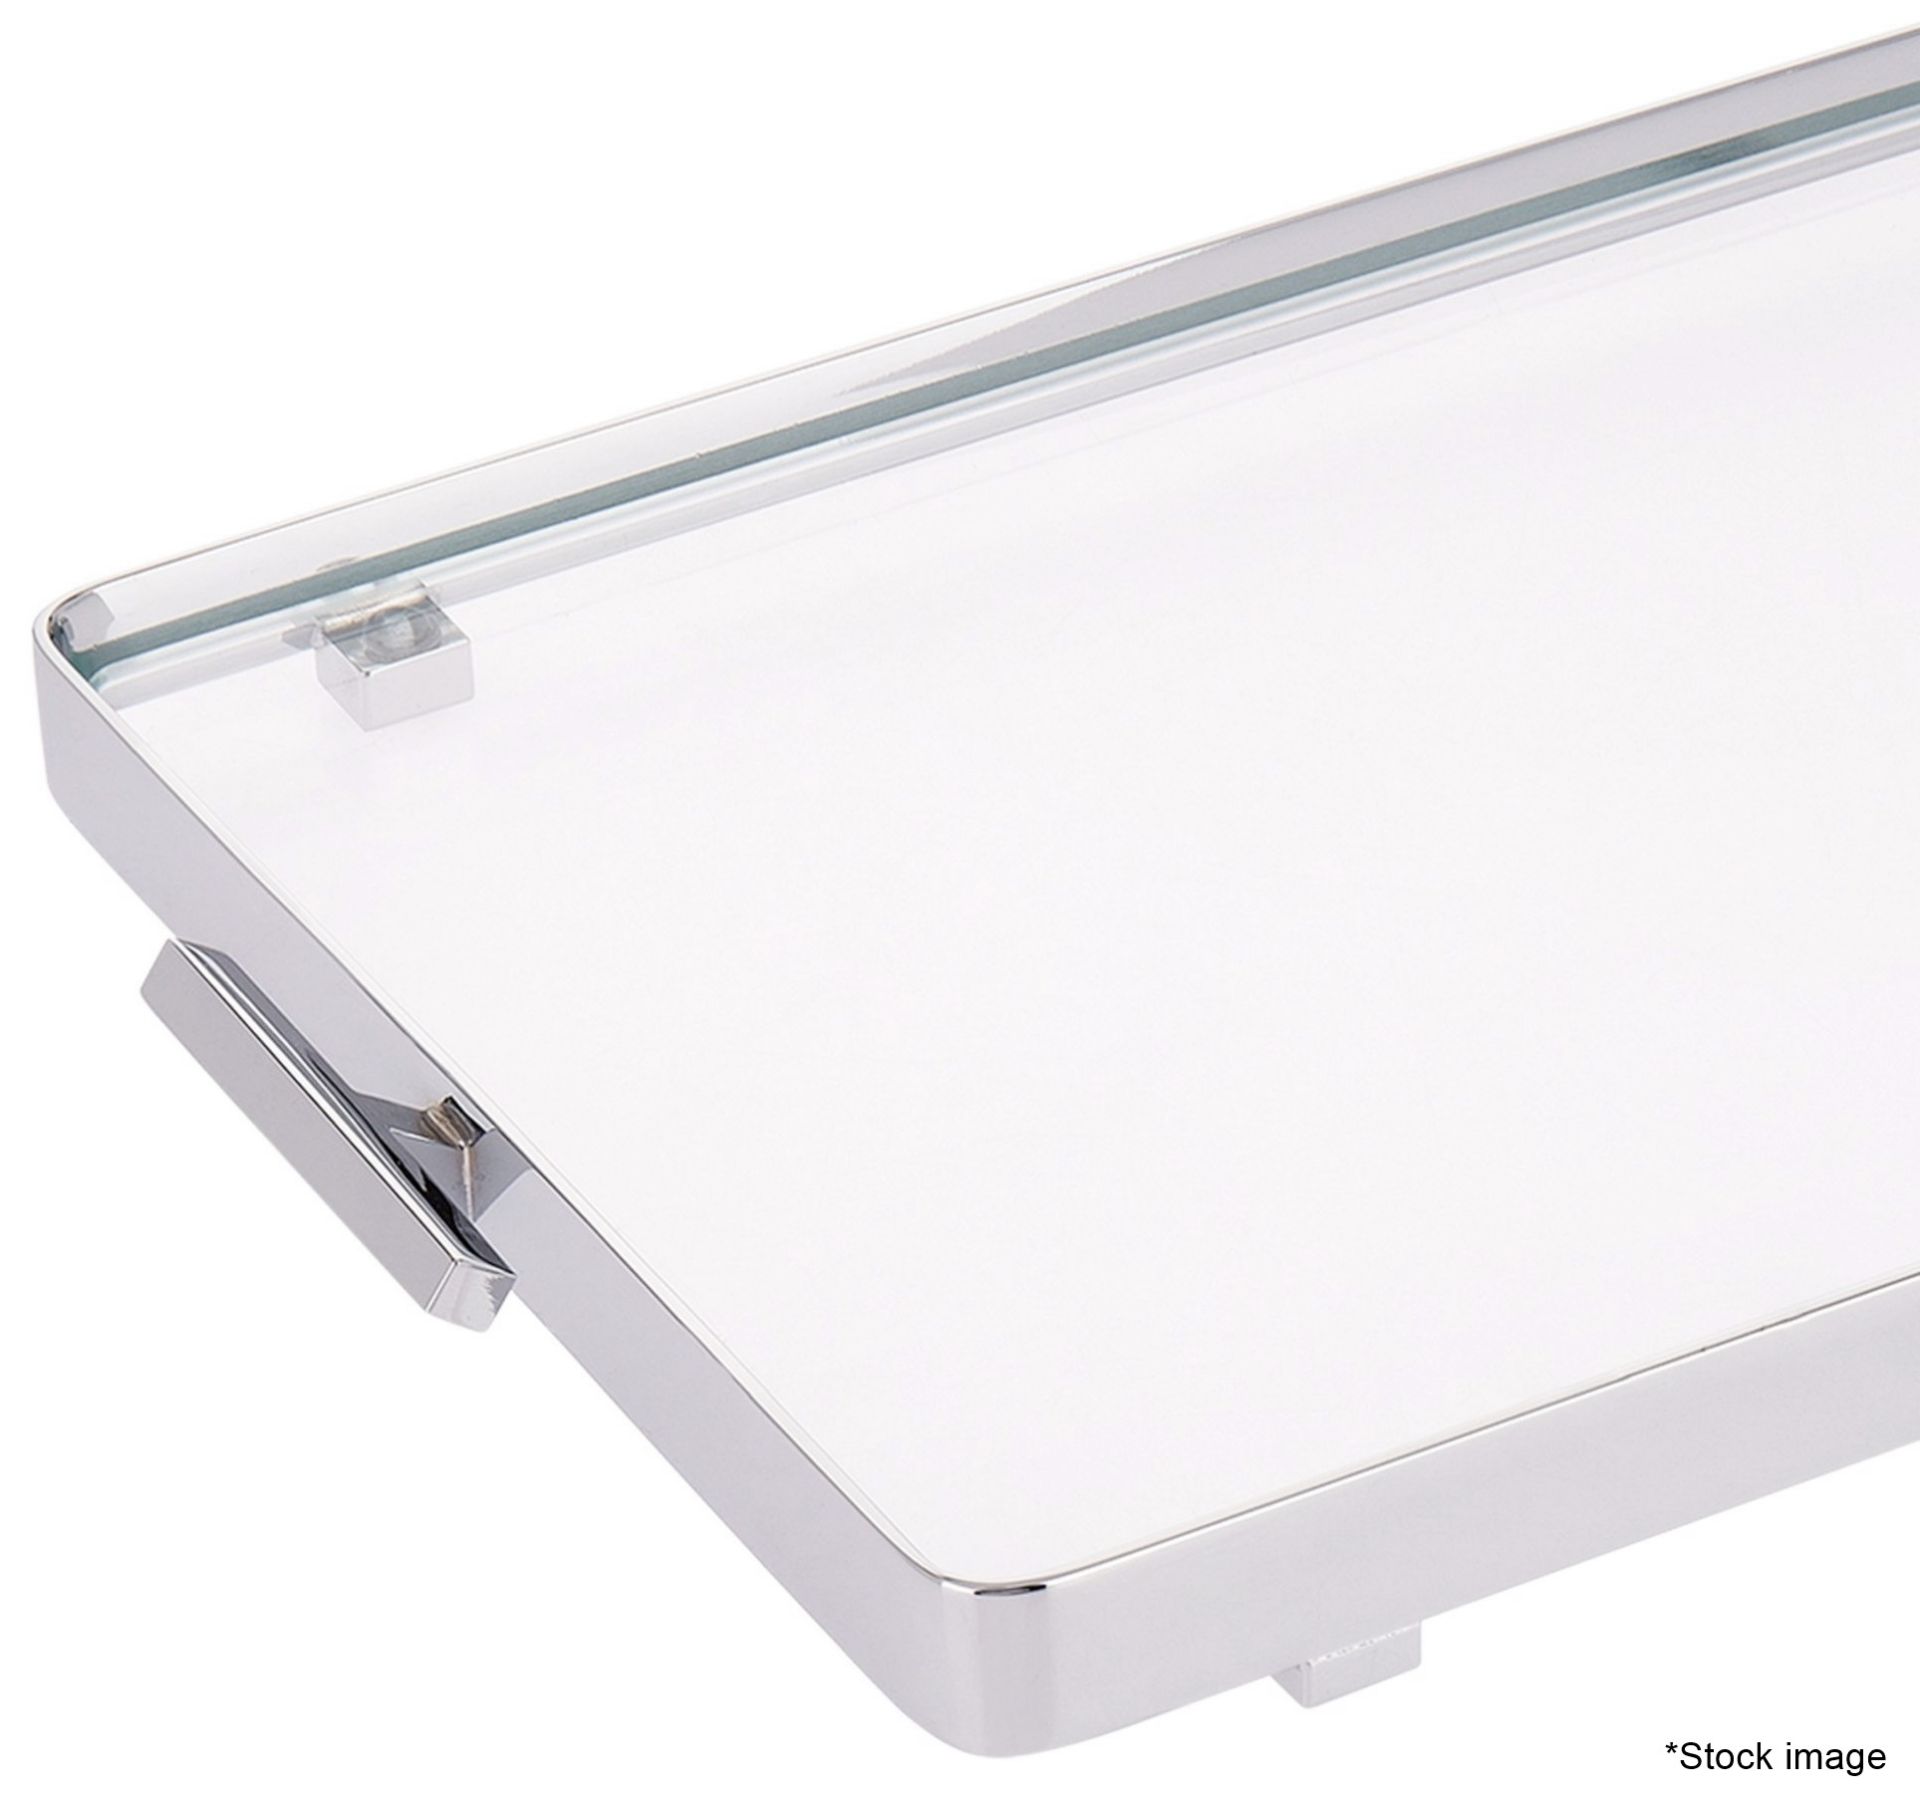 1 x ZODIAC Luxury Chrome Trimmed Glass Tray - Original Price £300.00 - Boxed - Read Full Description - Image 4 of 6